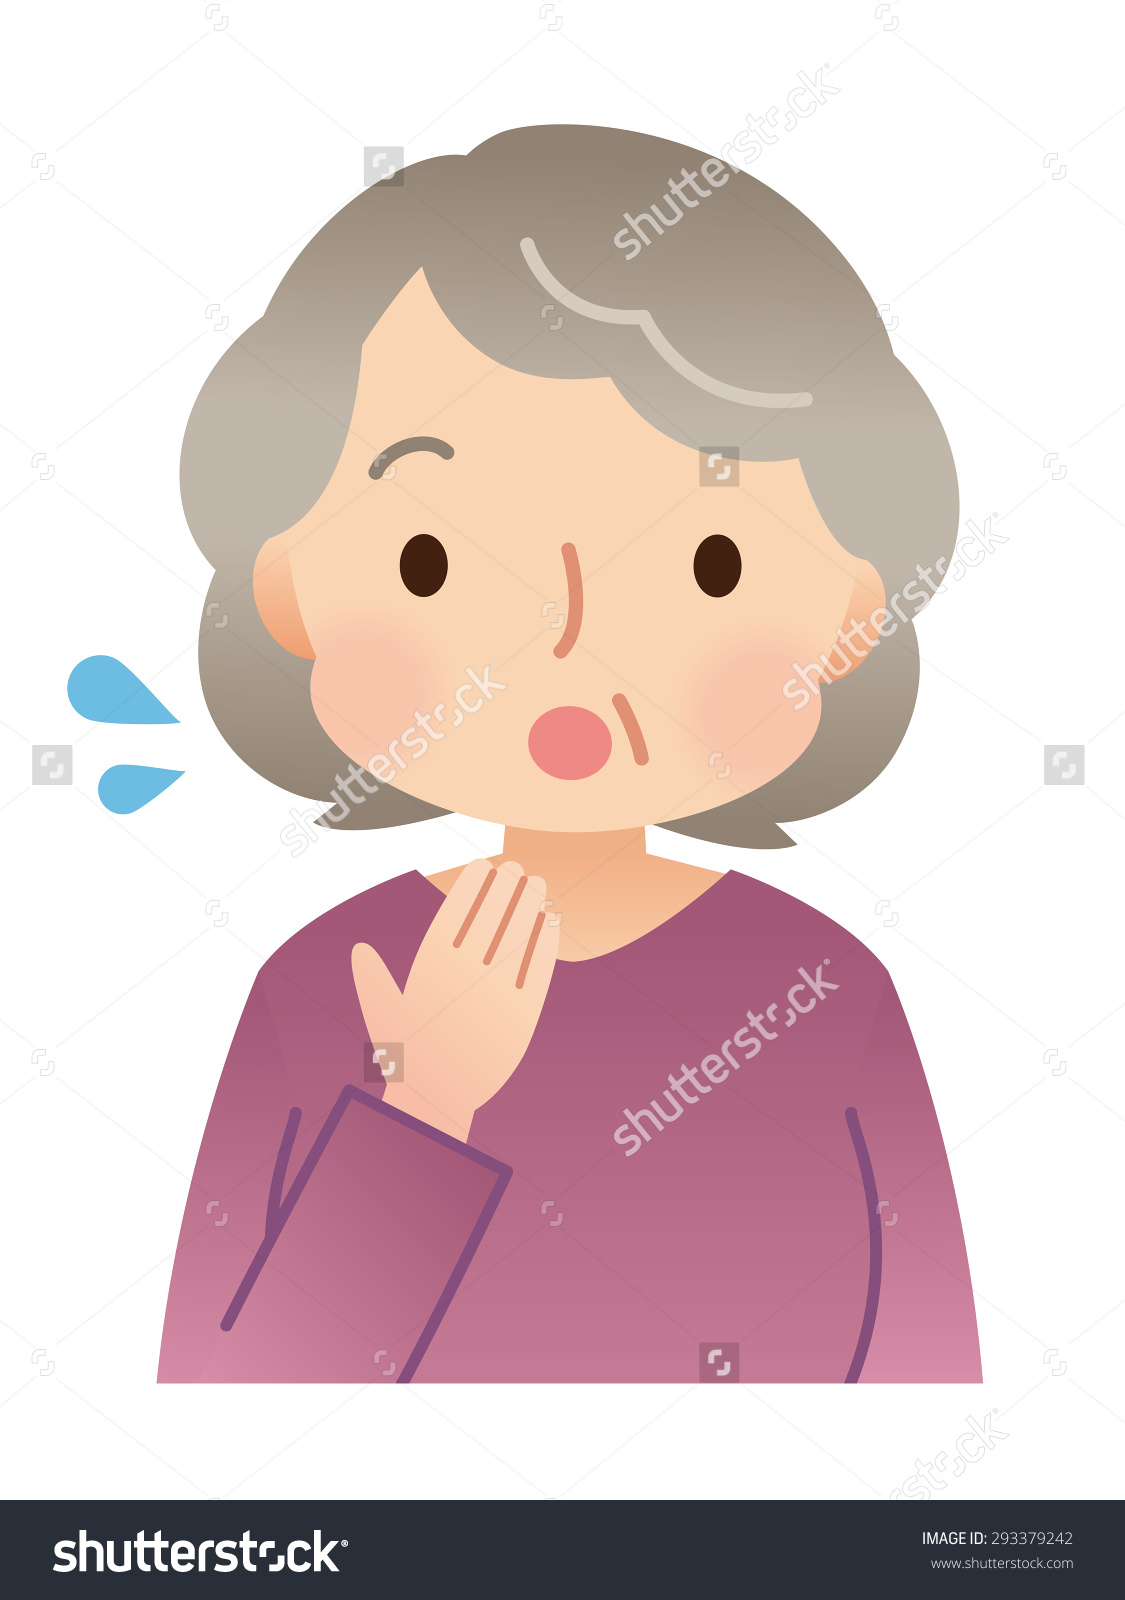 Cute Senior Woman Worry Face Stock Illustration 293379242.